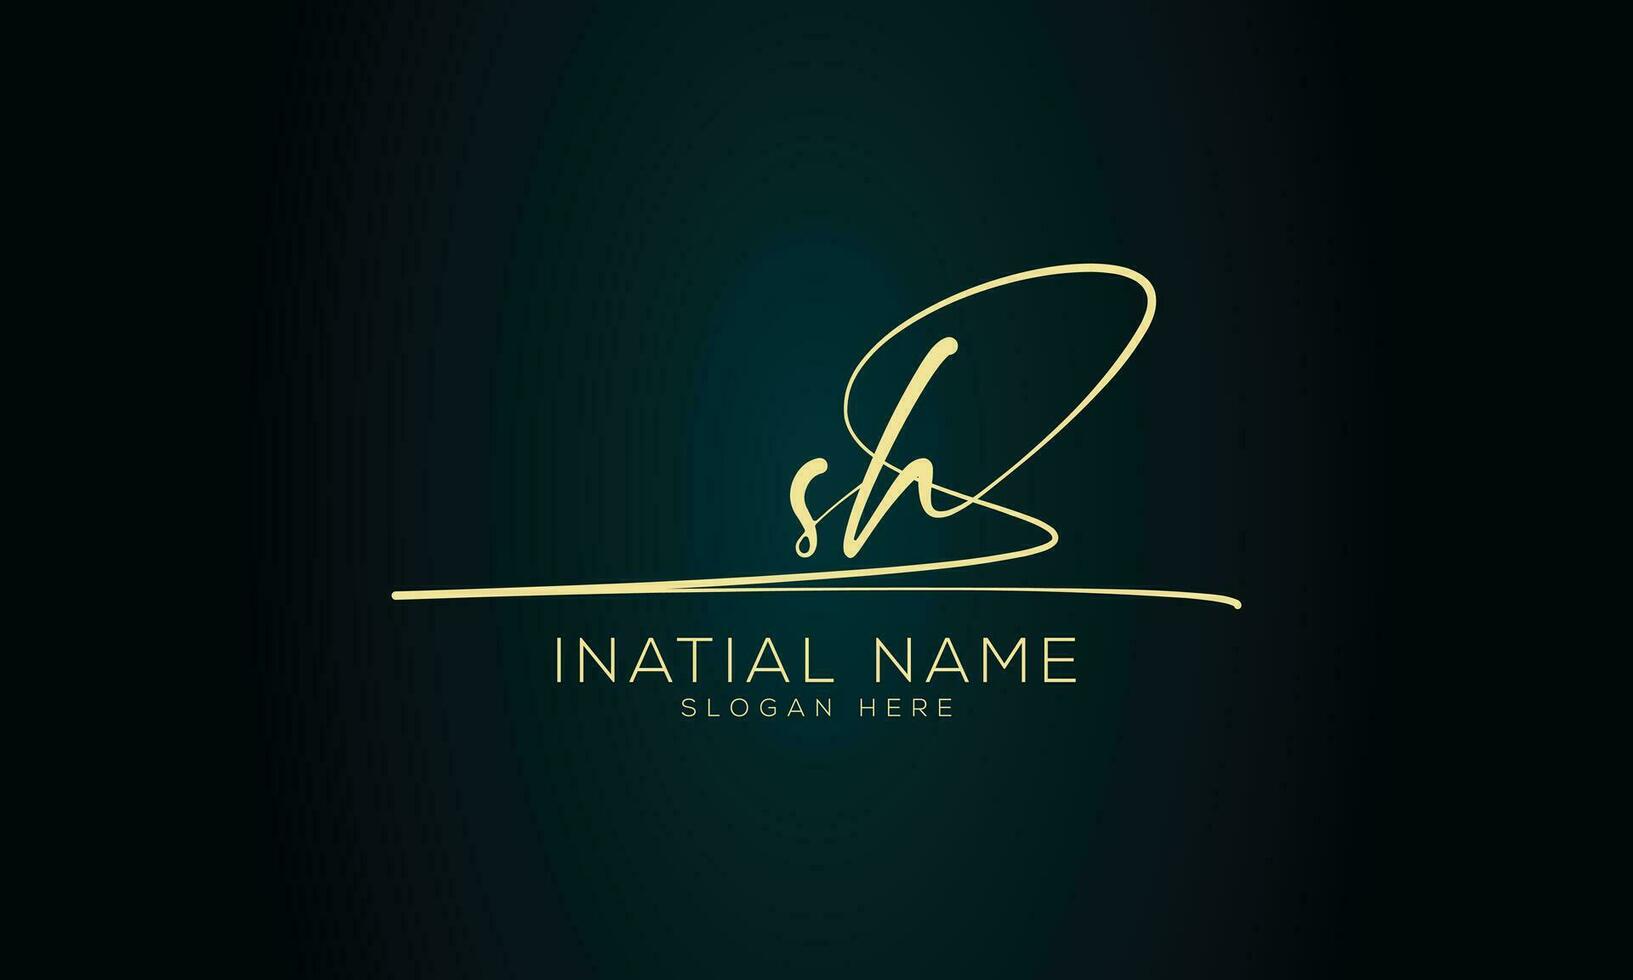 Sh initial handwriting signature logo design vector